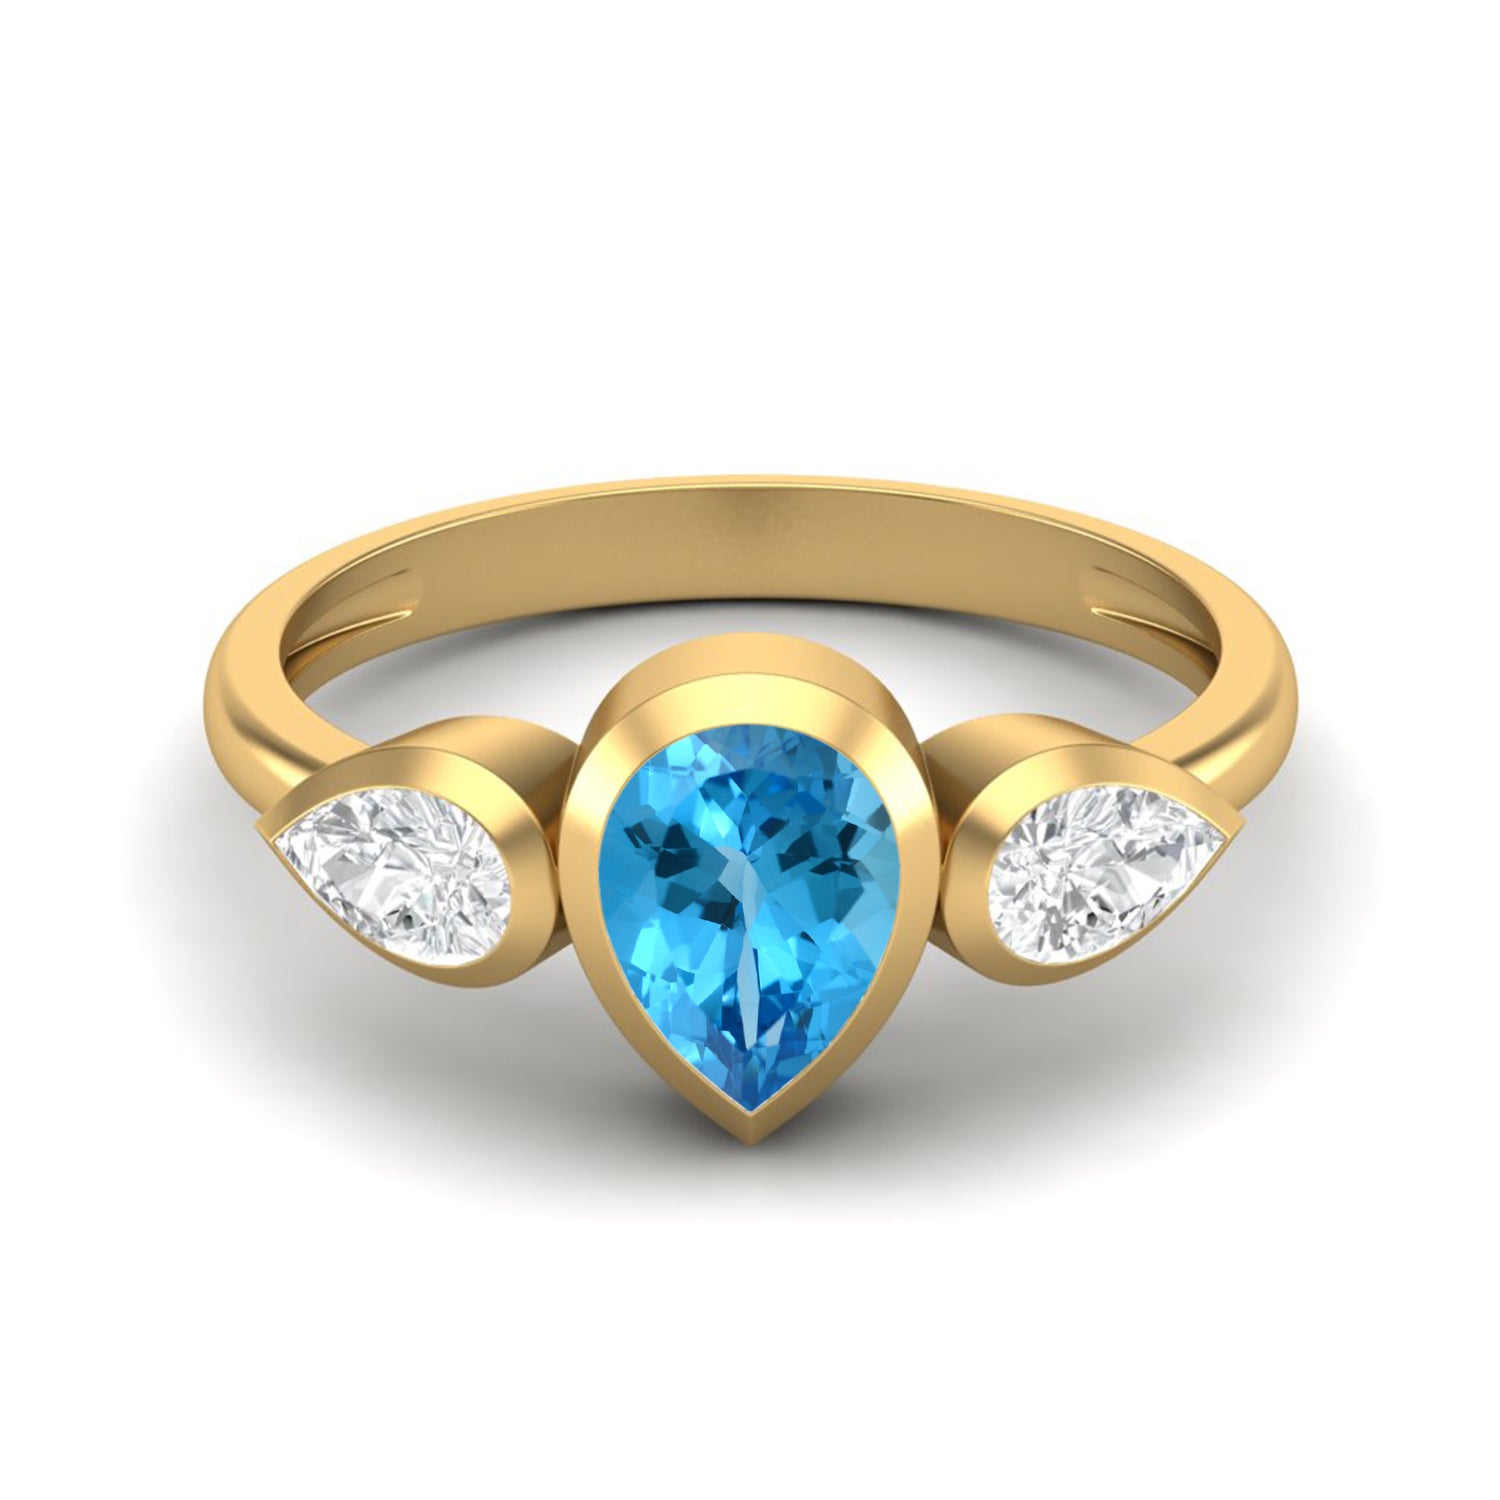 Goldenchen Fashion Jewelry 14k Gold Filled Sea Blue Topaz Love Heart CZ  Diamond Ring Women Anniversary Engagement Wedding Gemstone Ring (6) :  Amazon.in: Fashion